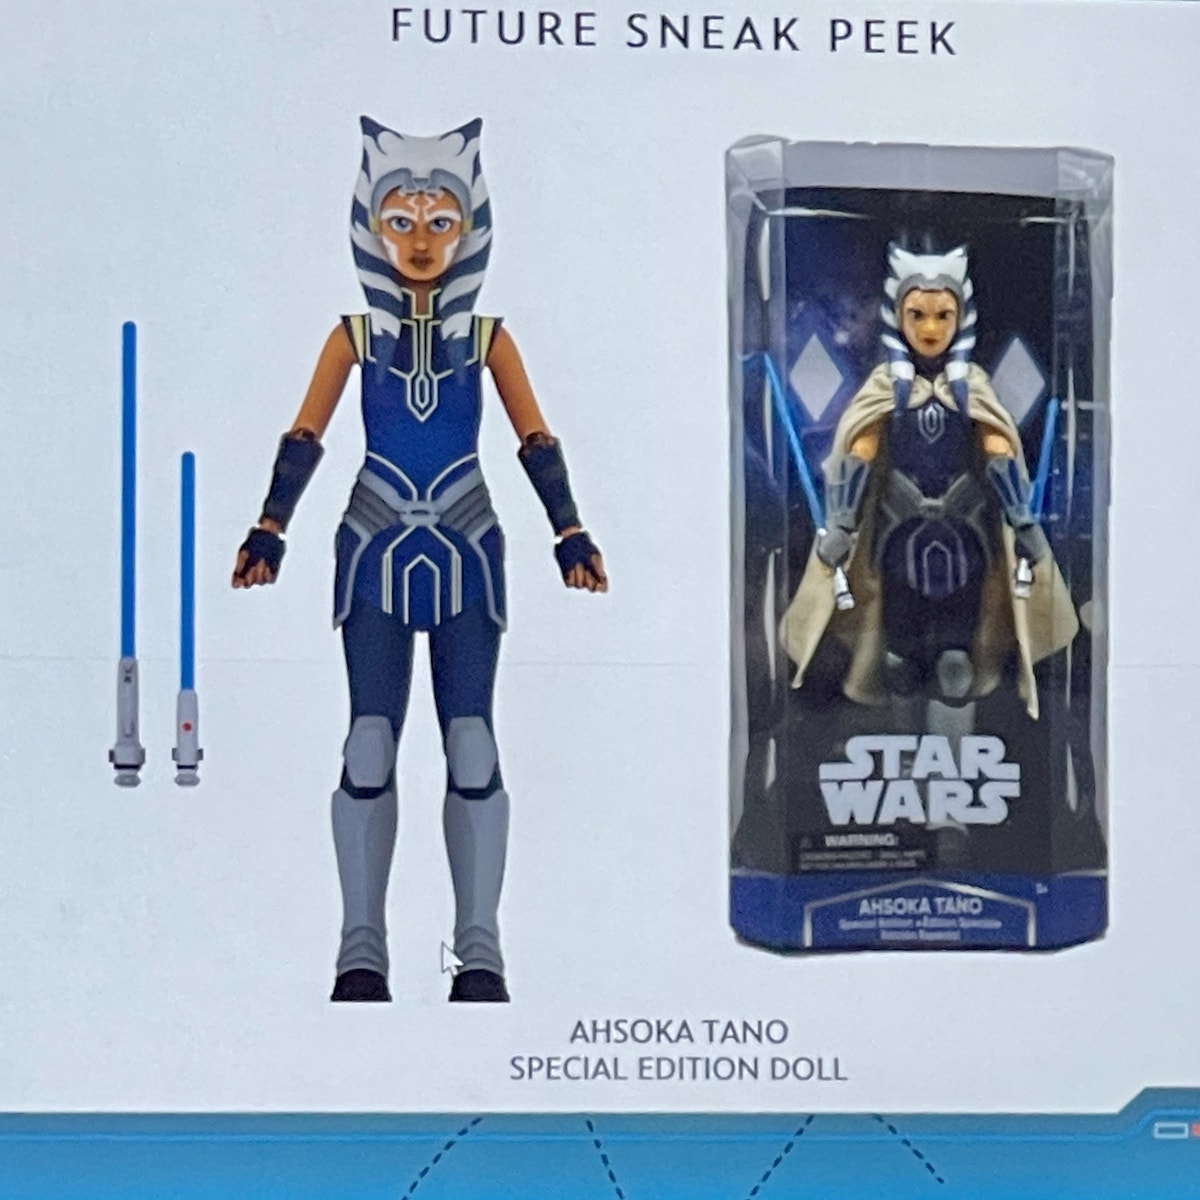 New Star Wars merchandise - Ashoka doll